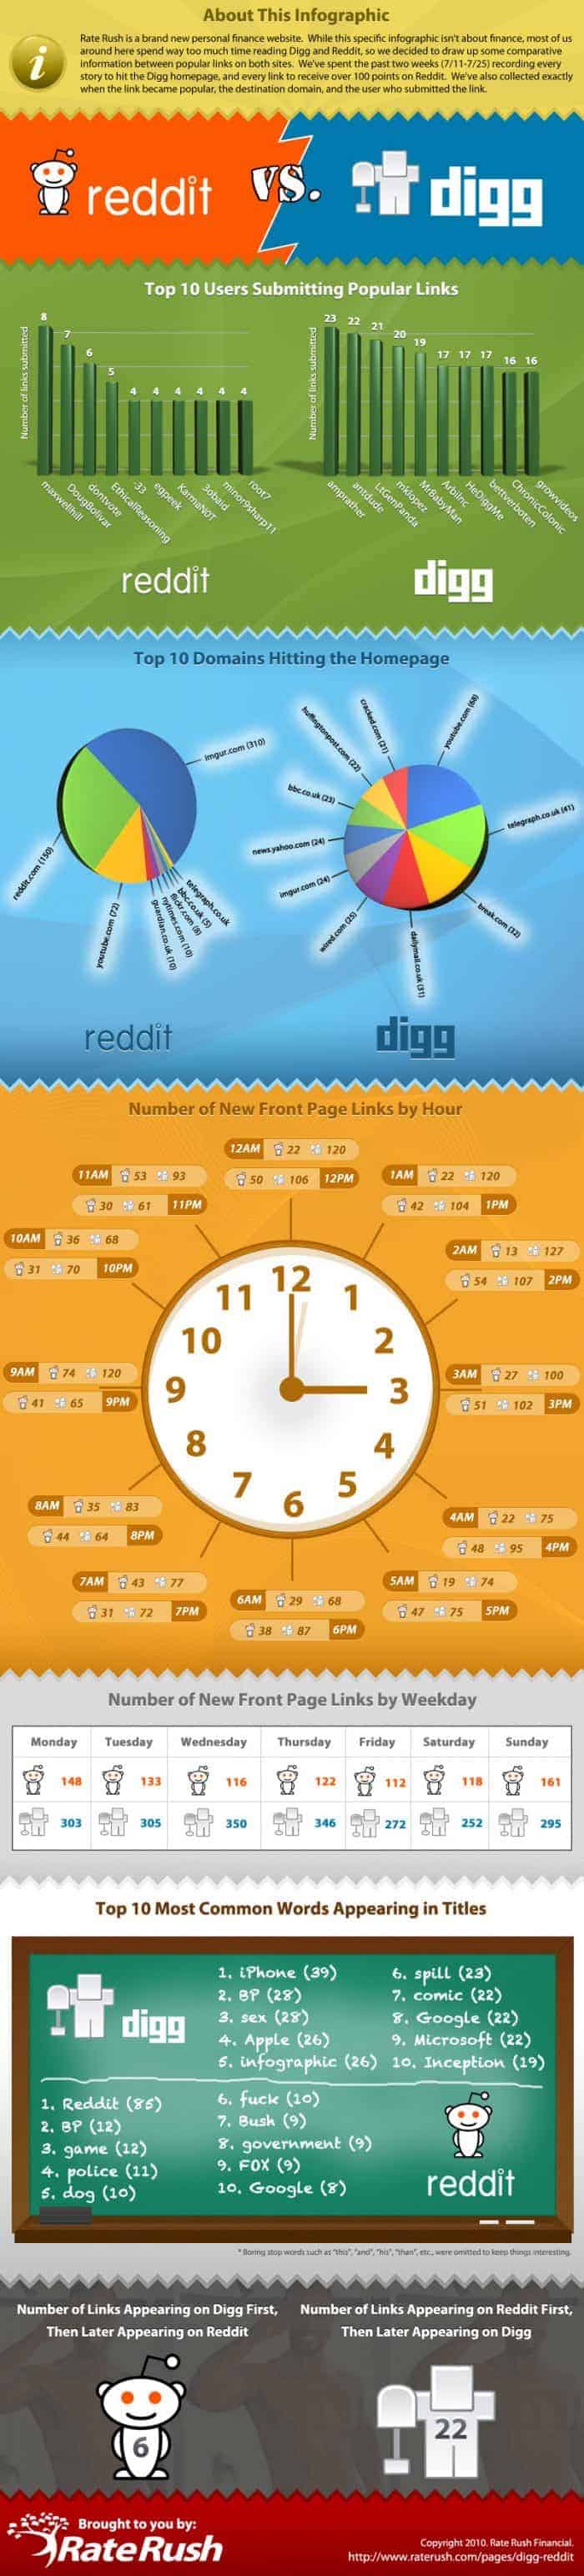 Reddit vs Digg comparison